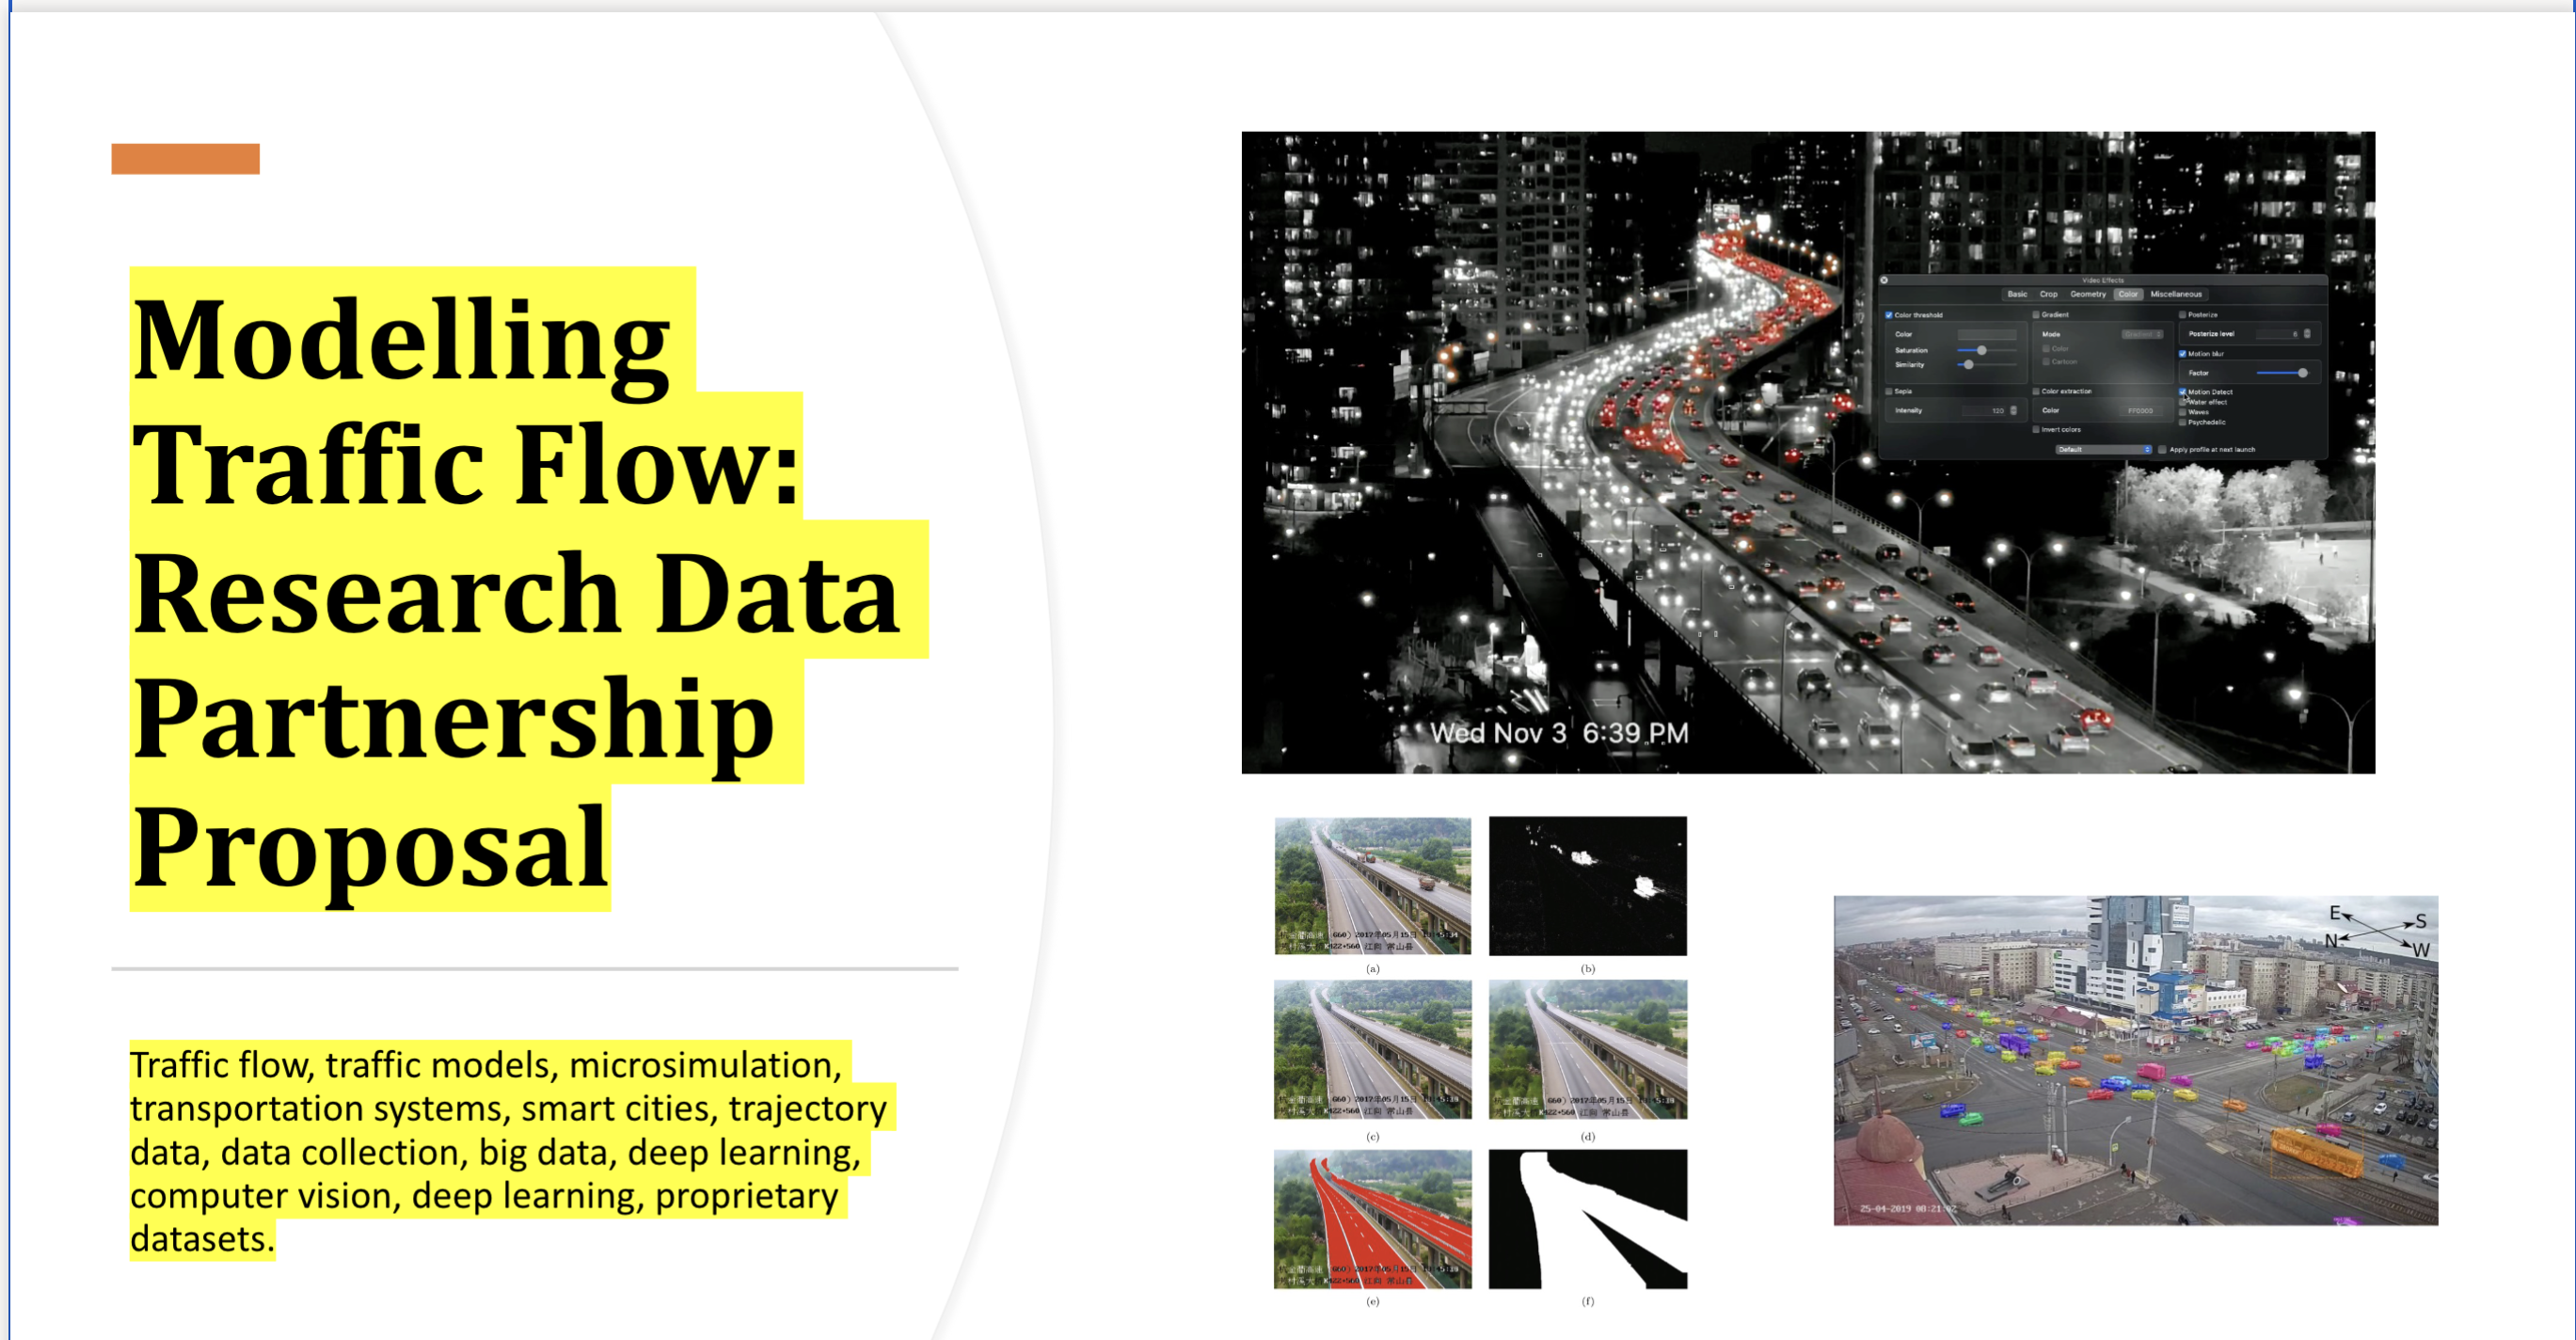 Modelling Traffic Flow Using AI